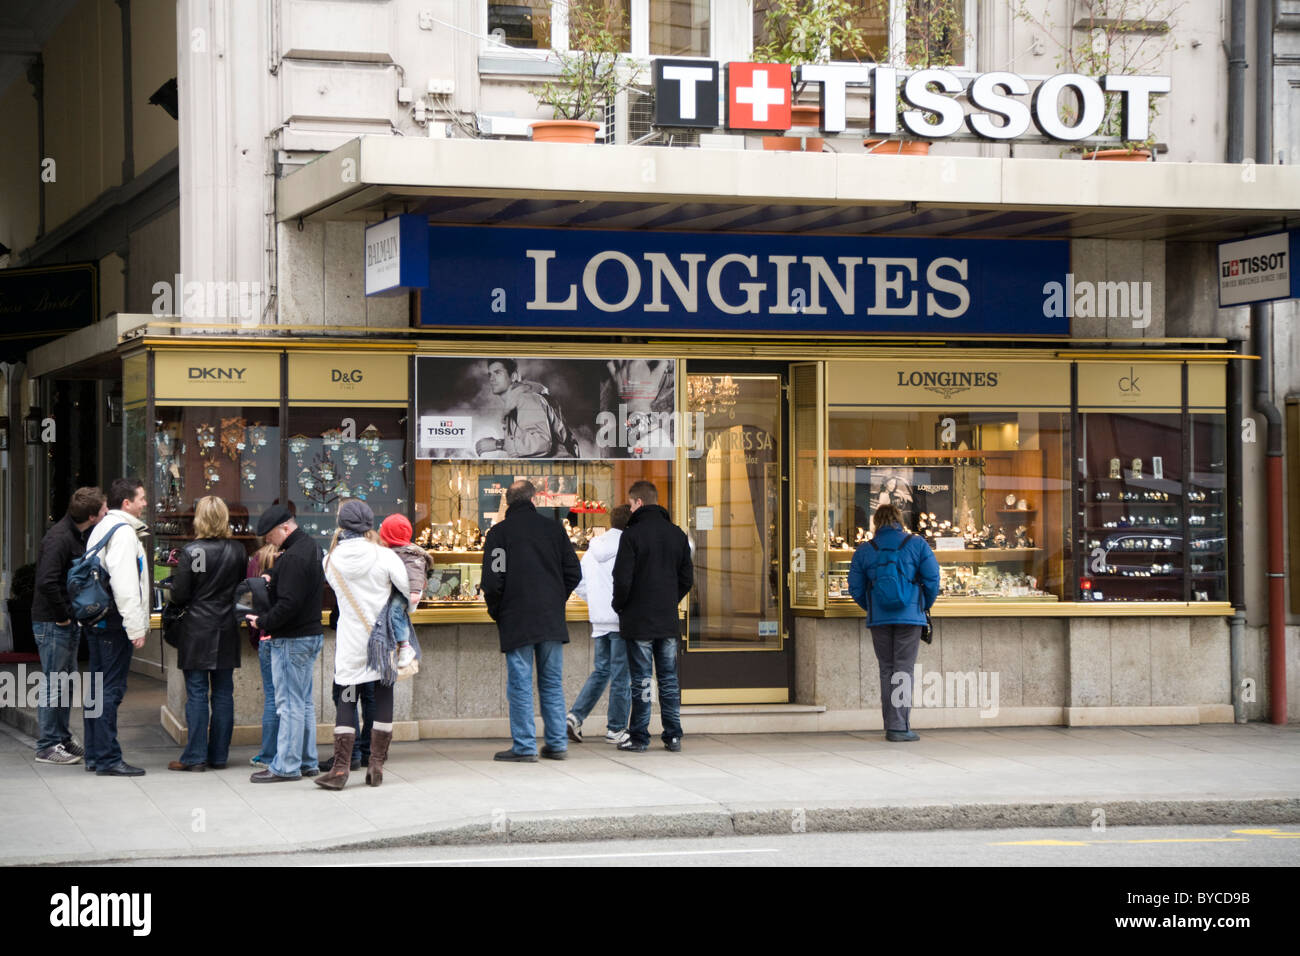 Juwelier / Juweliere shop / store in Genf verkaufen Swiss made Tissot und  Longines Armbanduhren. Geneve. Schweiz Stockfotografie - Alamy